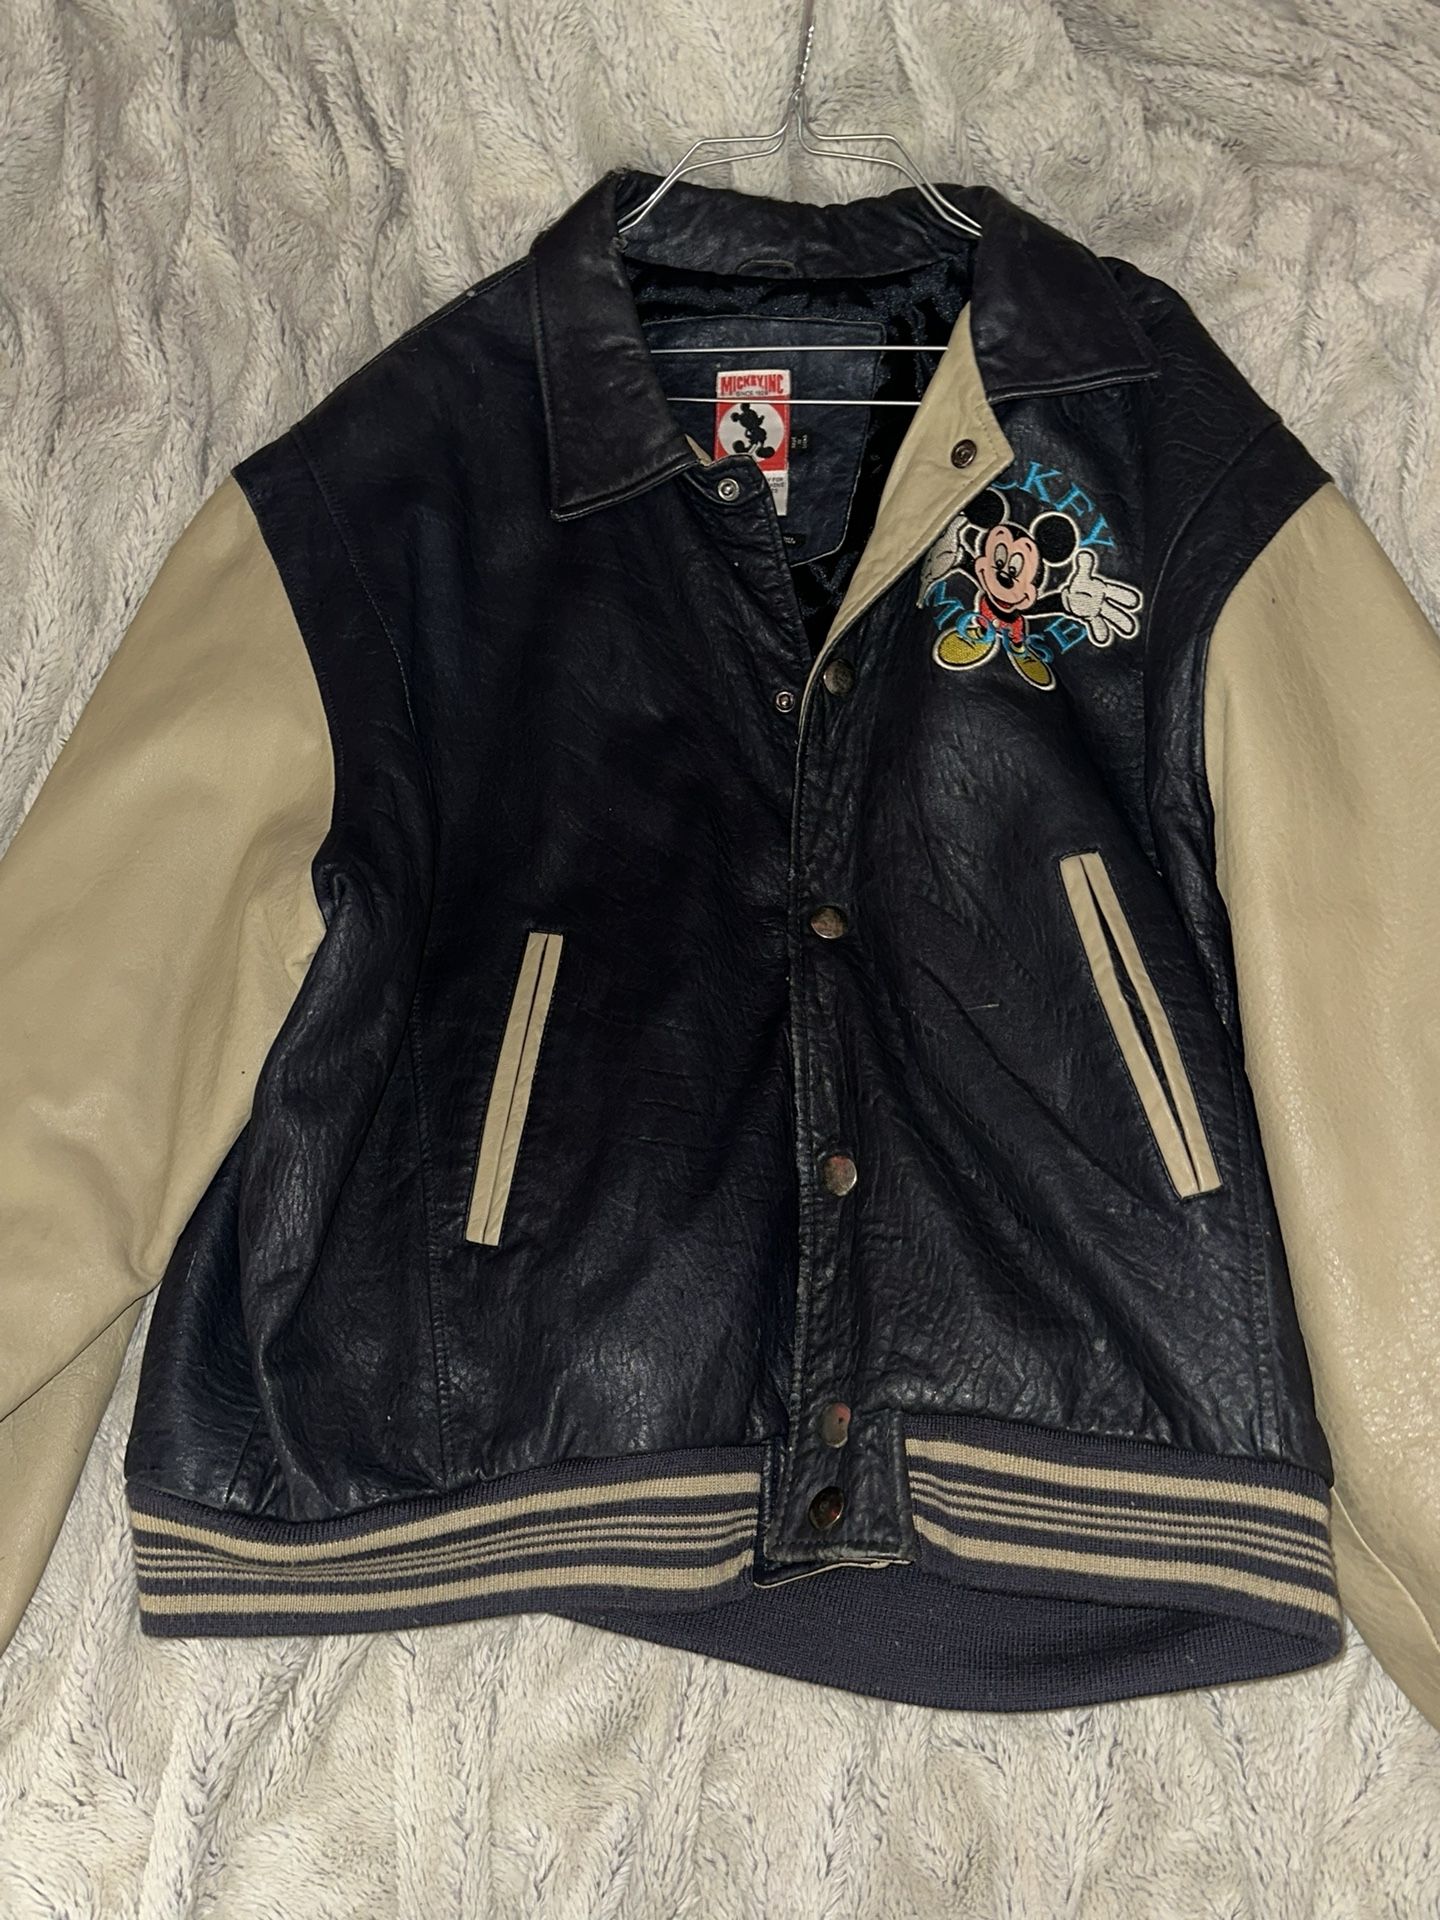 Vintage Disneyland exclusive bomber jacket